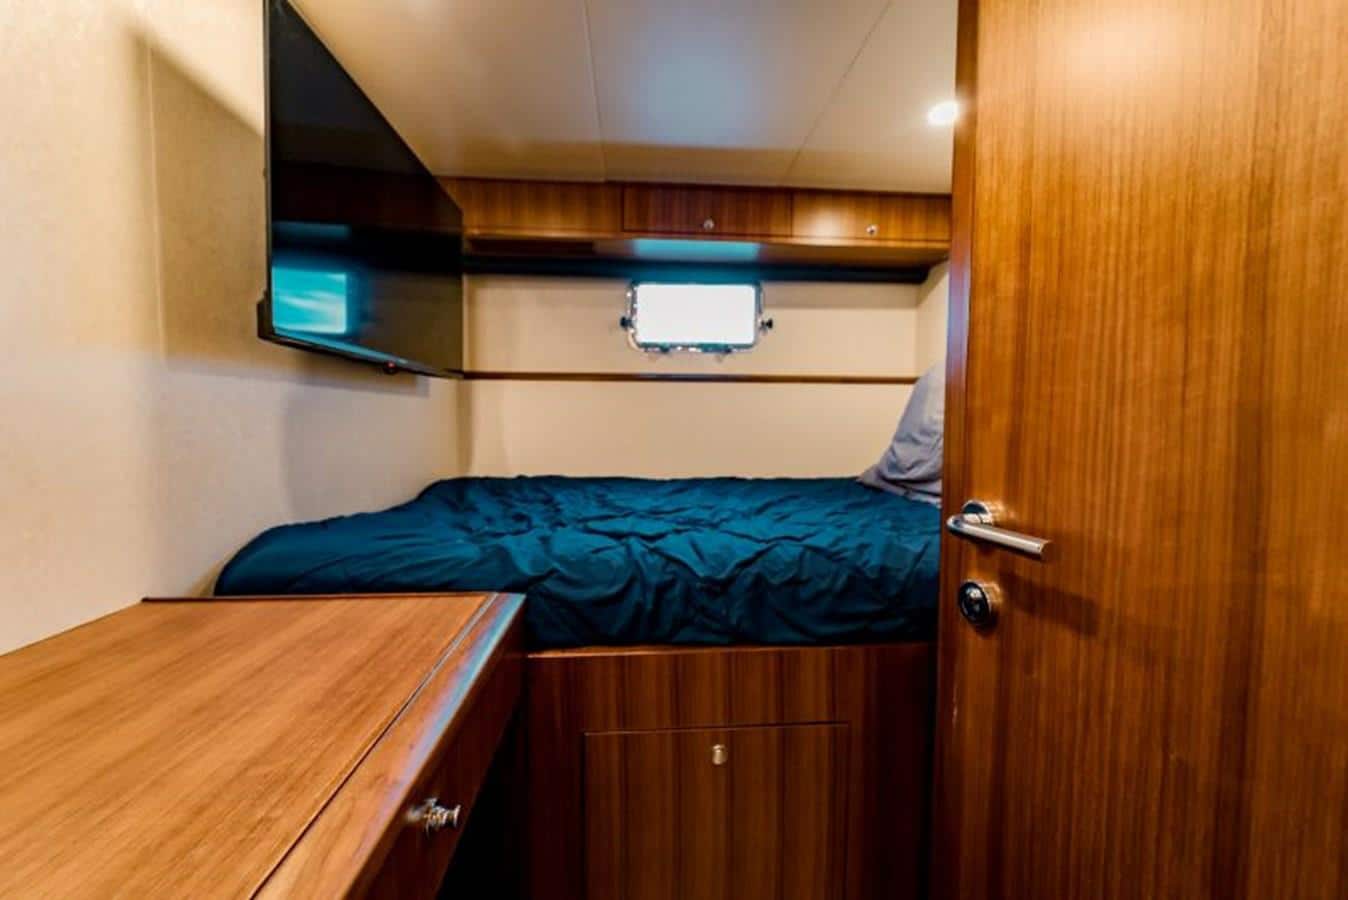 Sweet Salt - Crew Cabin with Blue Comforter and TV - 2016 Ocean Alexander 85e